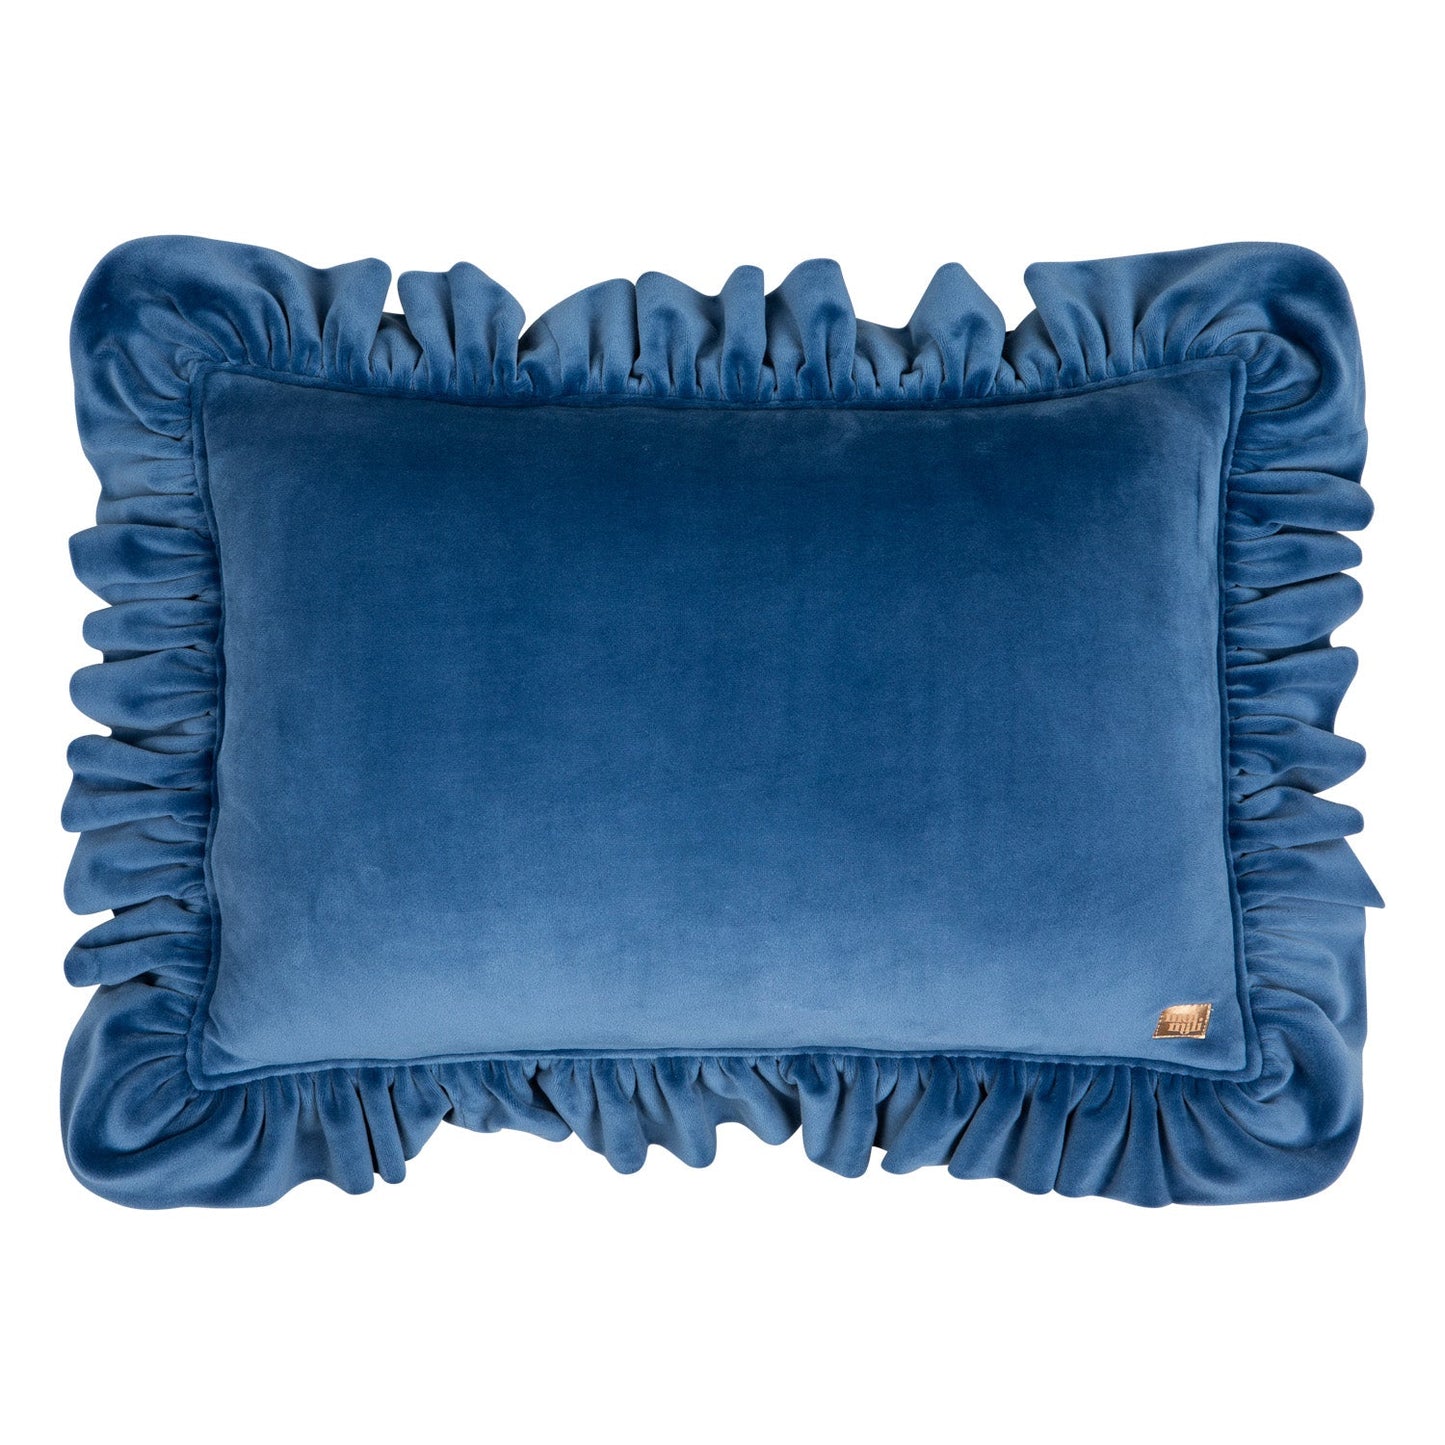 “Sapphire” Soft Velvet Pillow with Frill